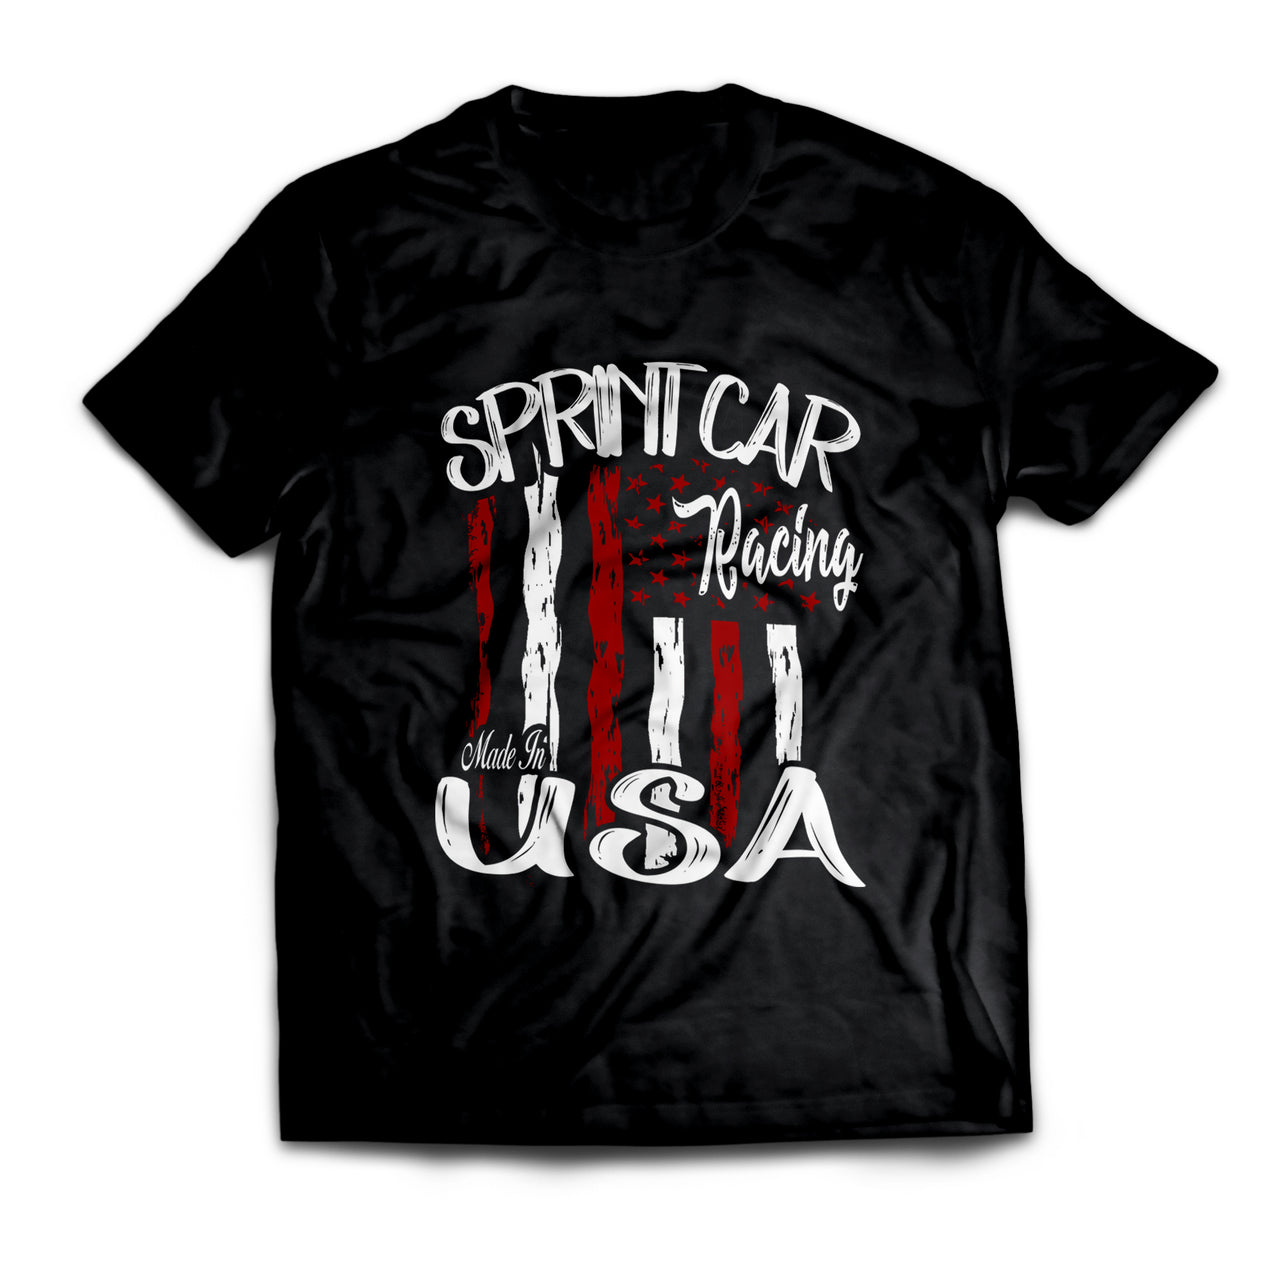 Sprint Car Racing Made In USA T-Shirts